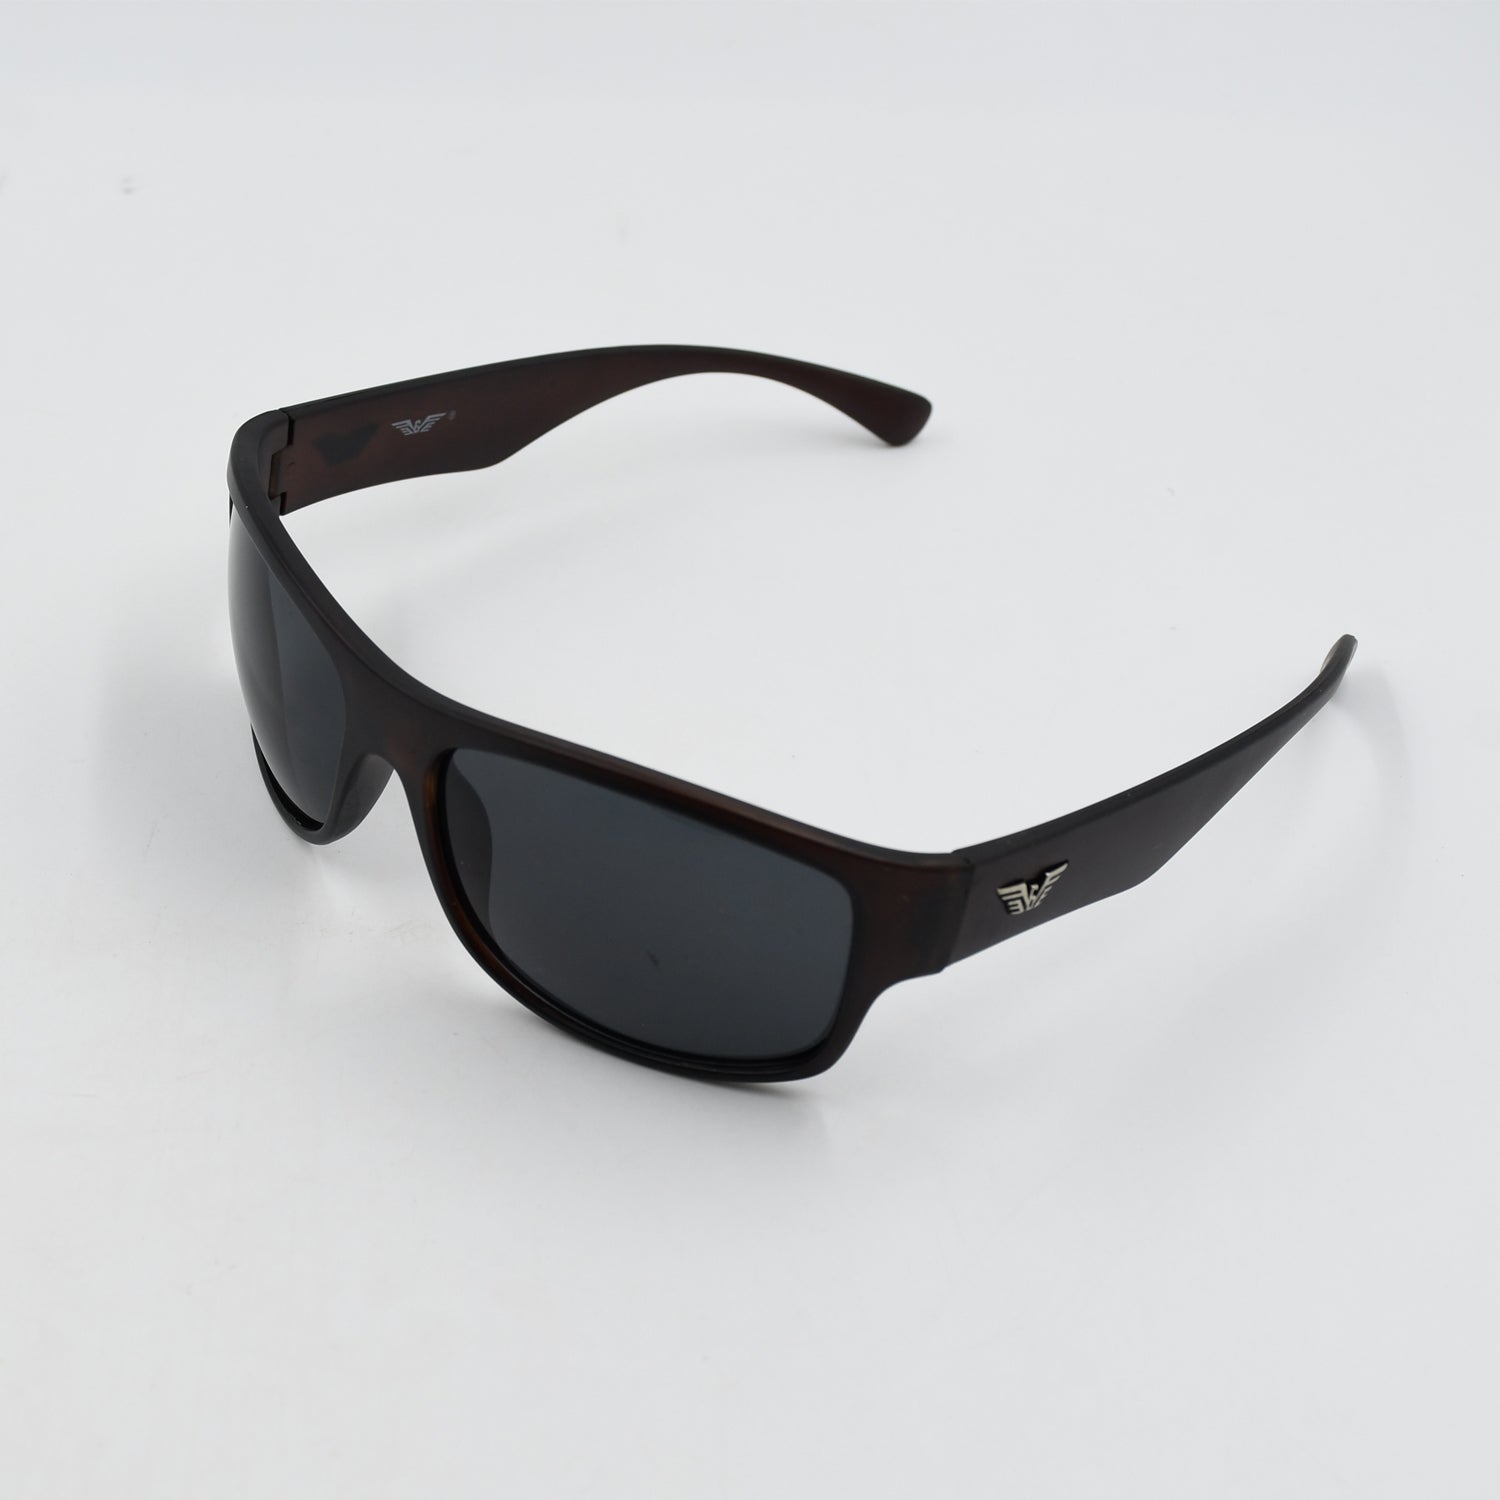 Fashion Sunglasses Full Rim Wayfarer Branded Latest And Stylish Sunglasses | Polarized And 100% Uv Protected | Men Sunglasses